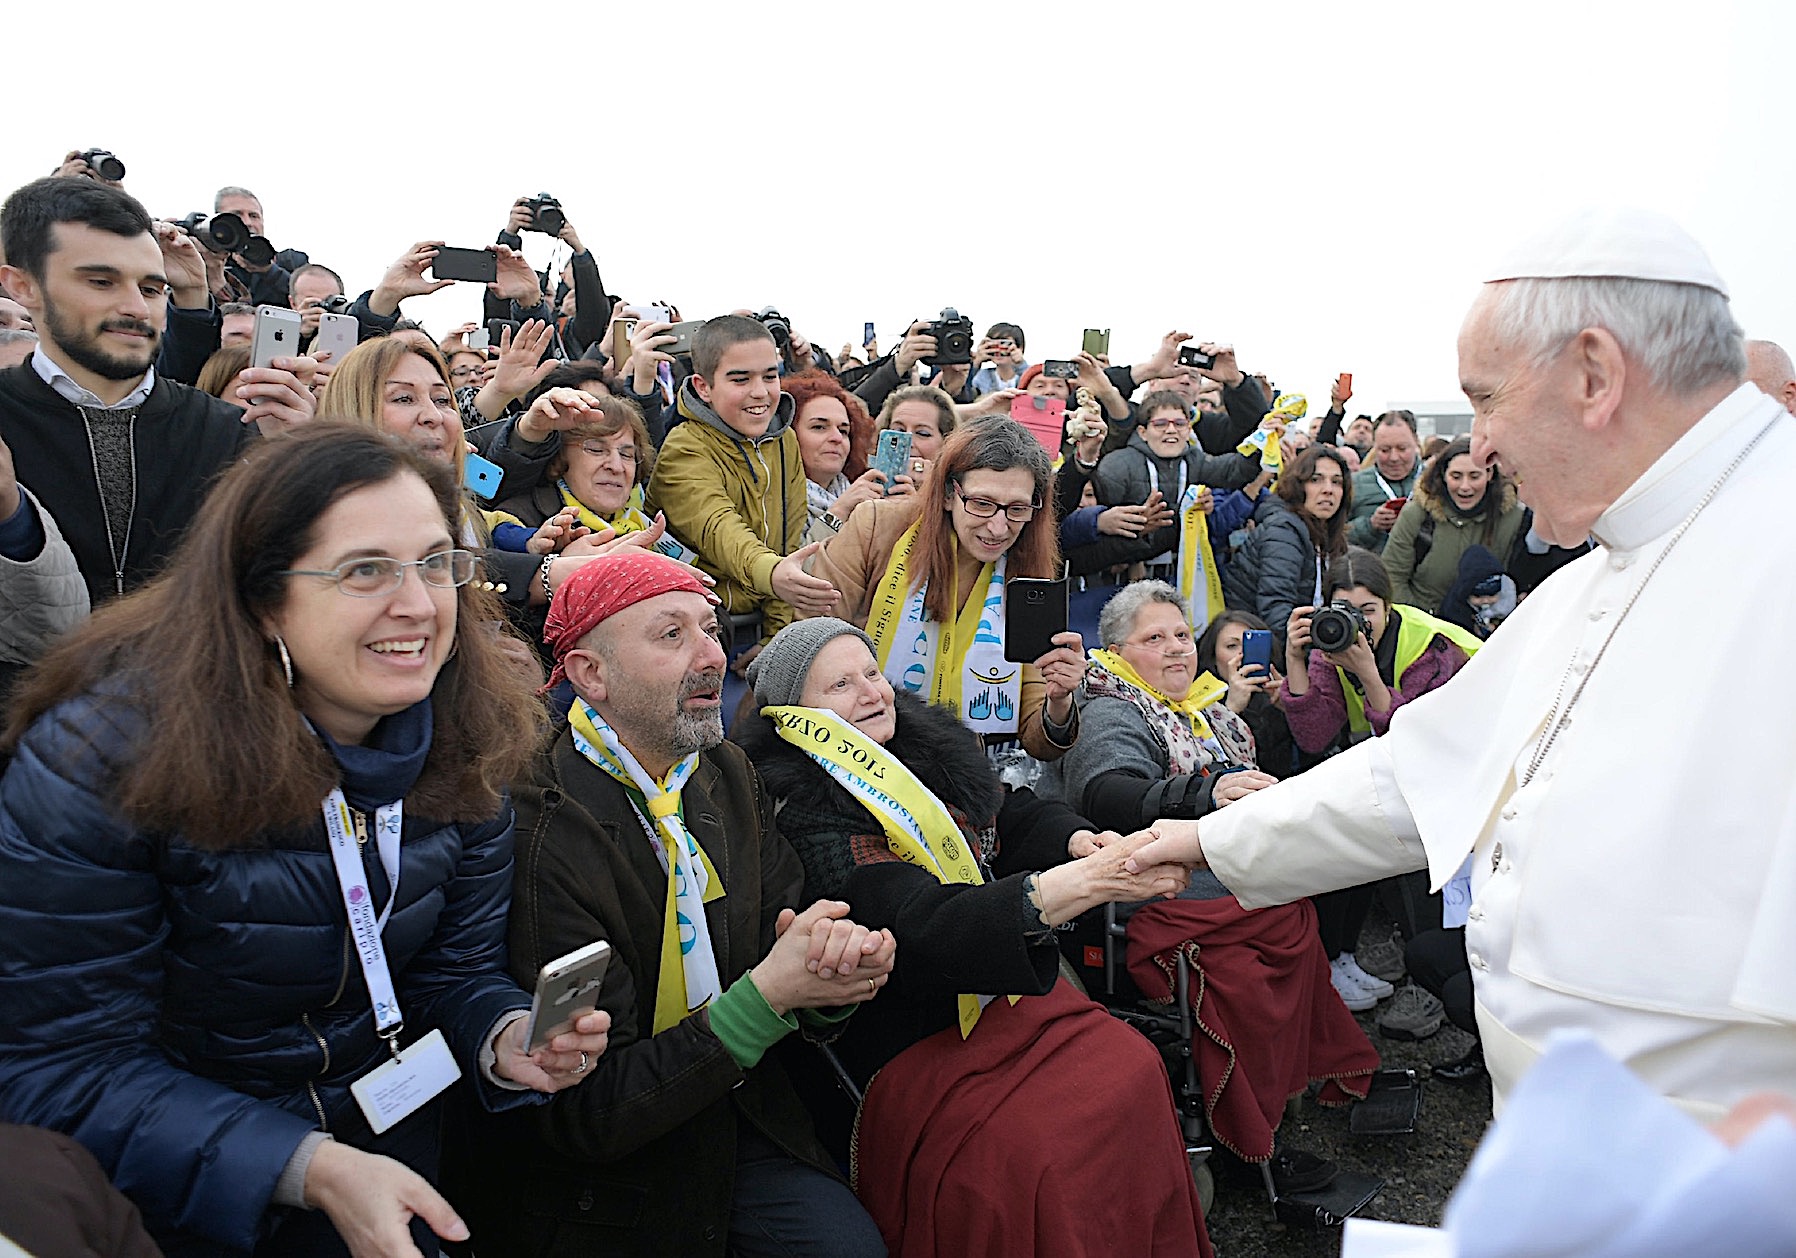 El Papa en Milán' (Fto. Osservatore © Romano).jpg